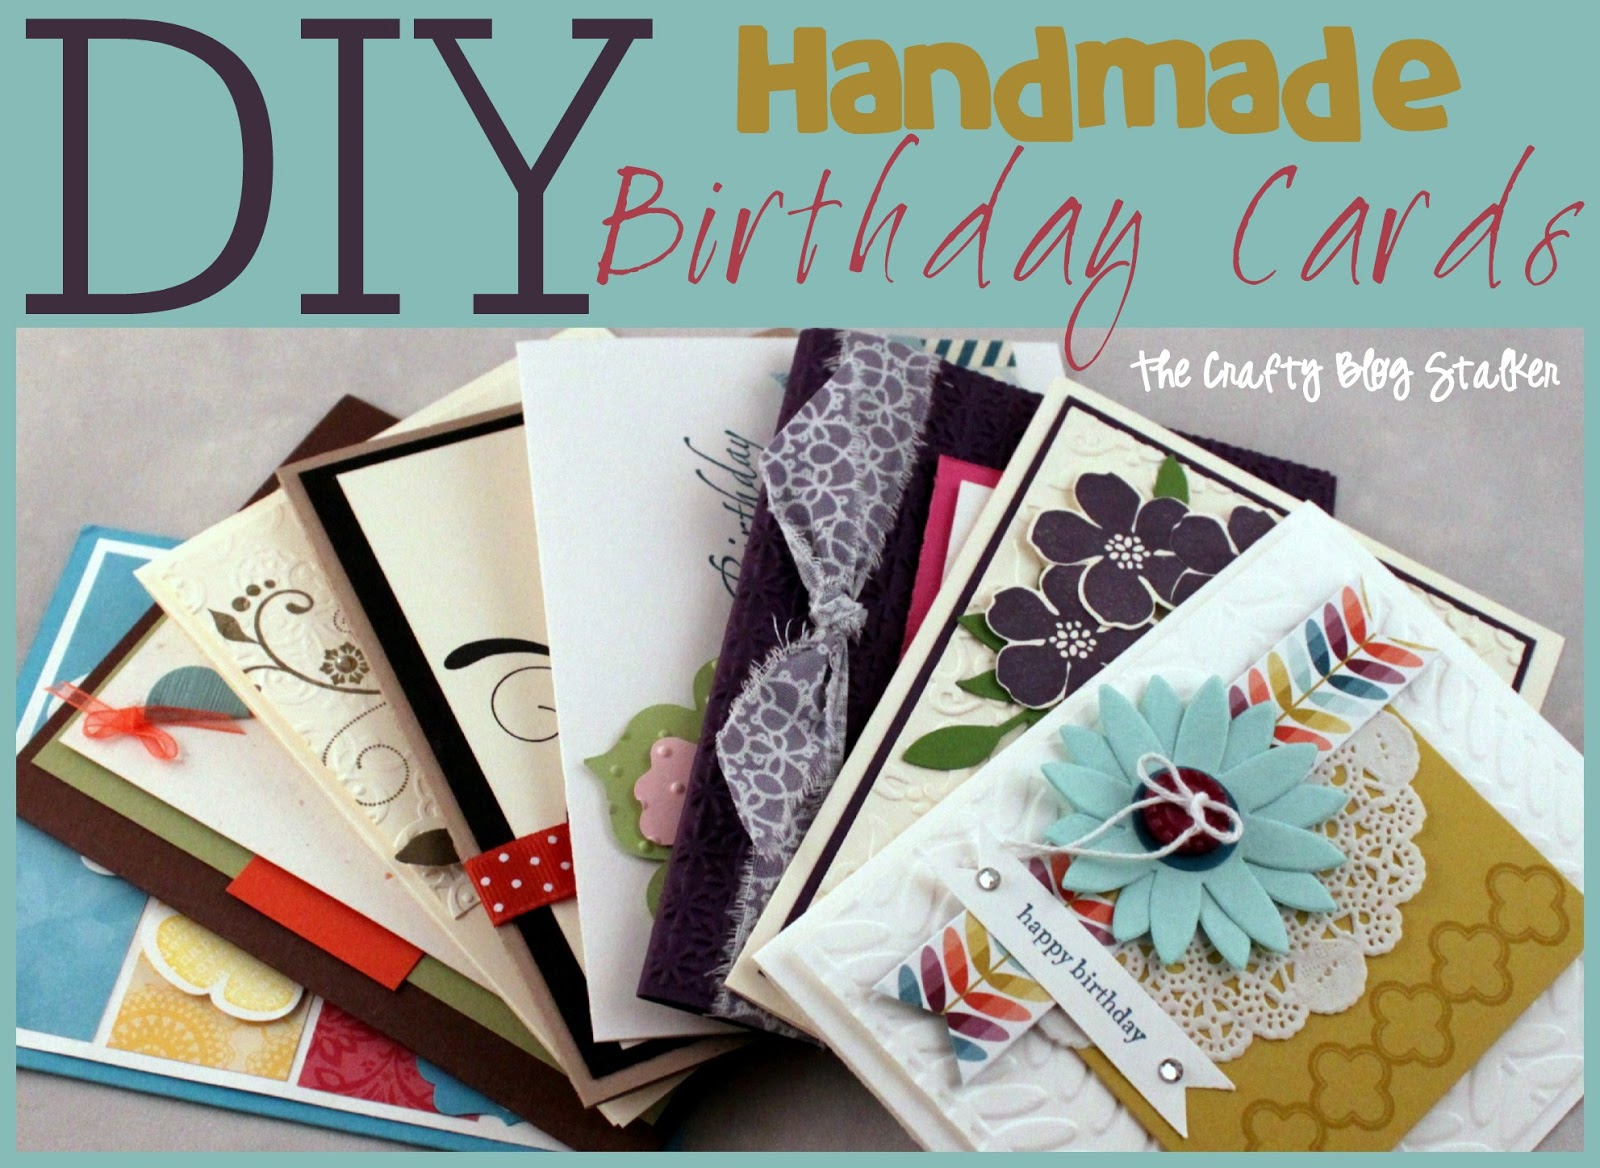 Making Birthday Cards Homemade Birthday Card Ideas Handmade Birthday Card Ideas The Crafty Blog Stalker